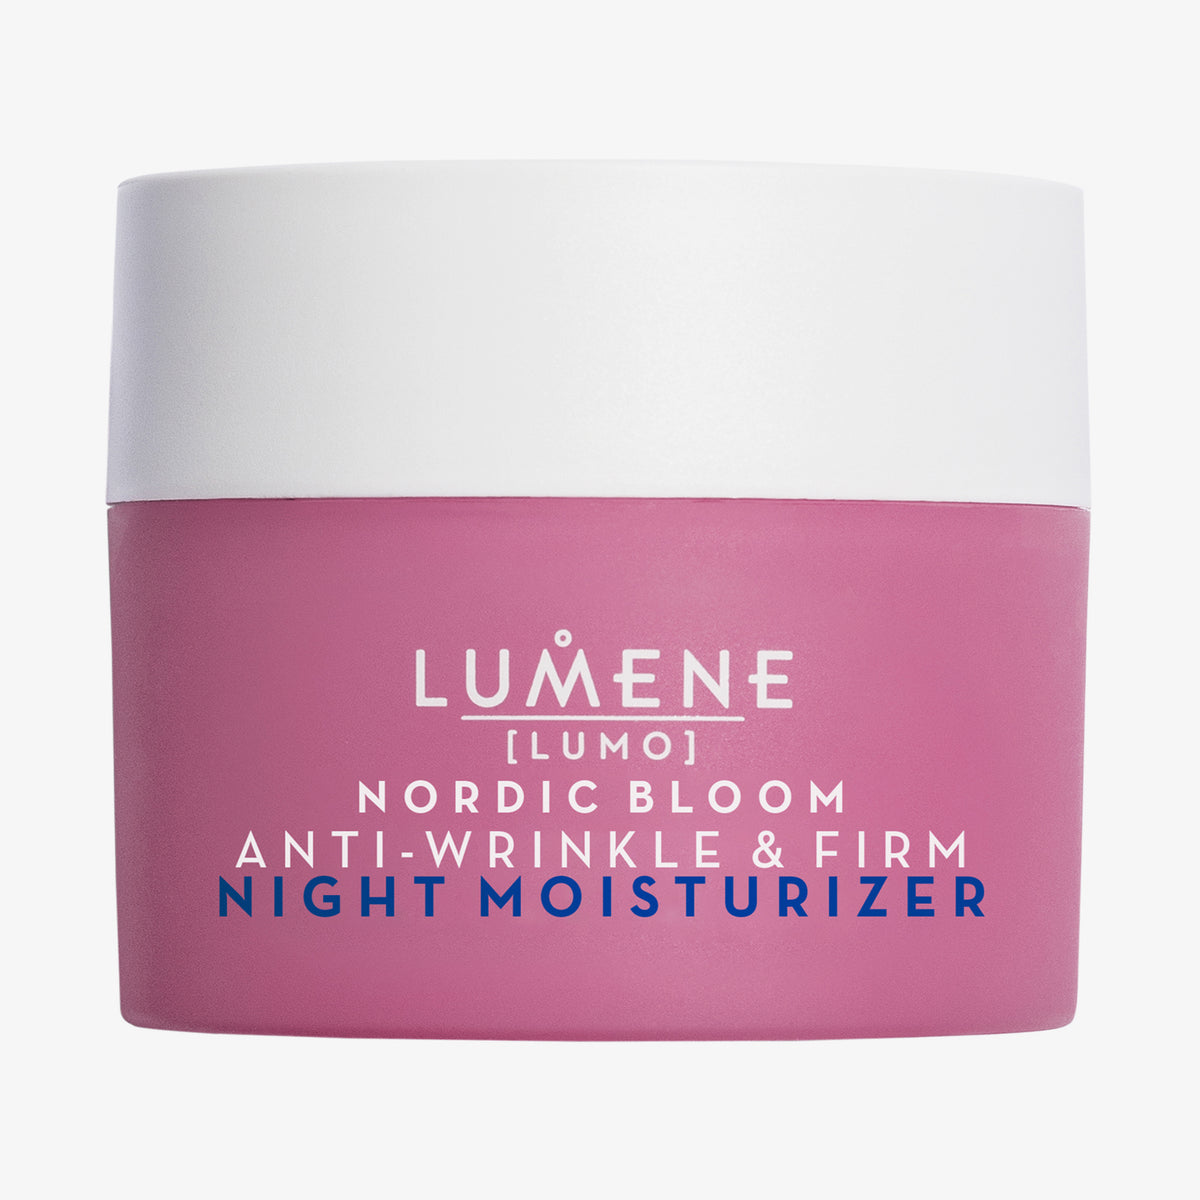 Lumene | NORDIC BLOOM [LUMO] Anti-wrinkle & Firm Night Moisturizer